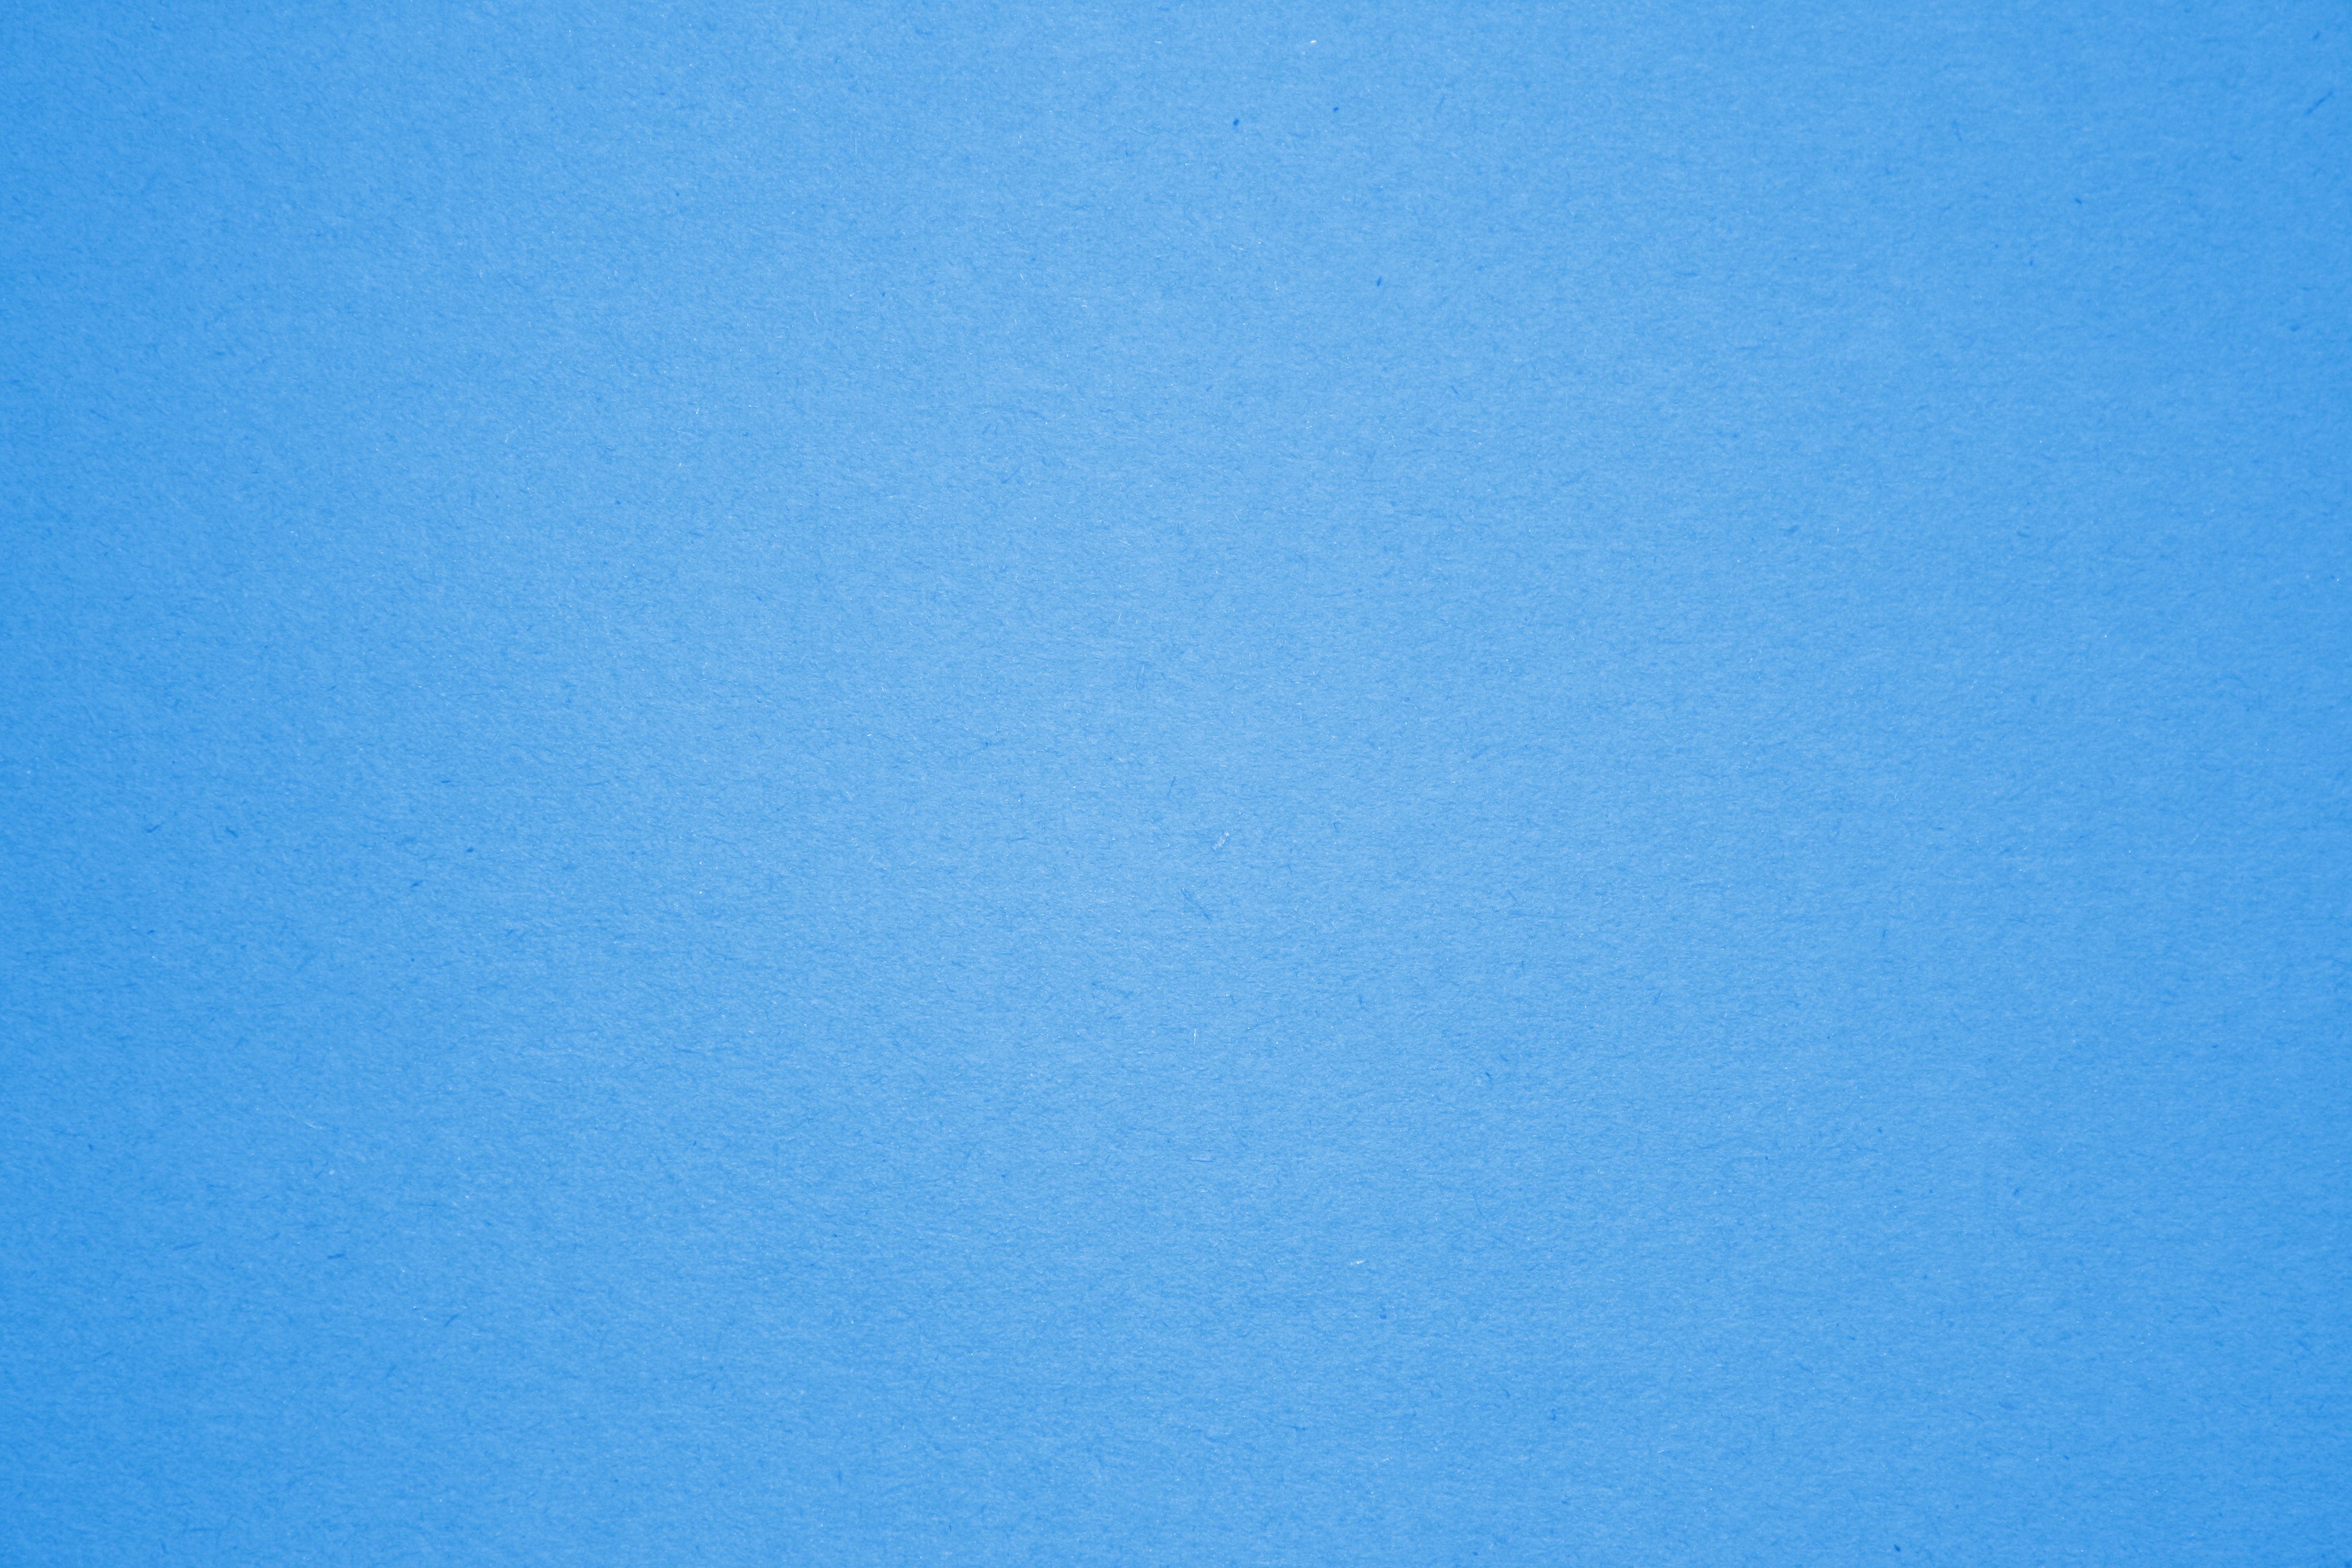 Large Light Blue Construction Paper Texture Stock Photo - Download